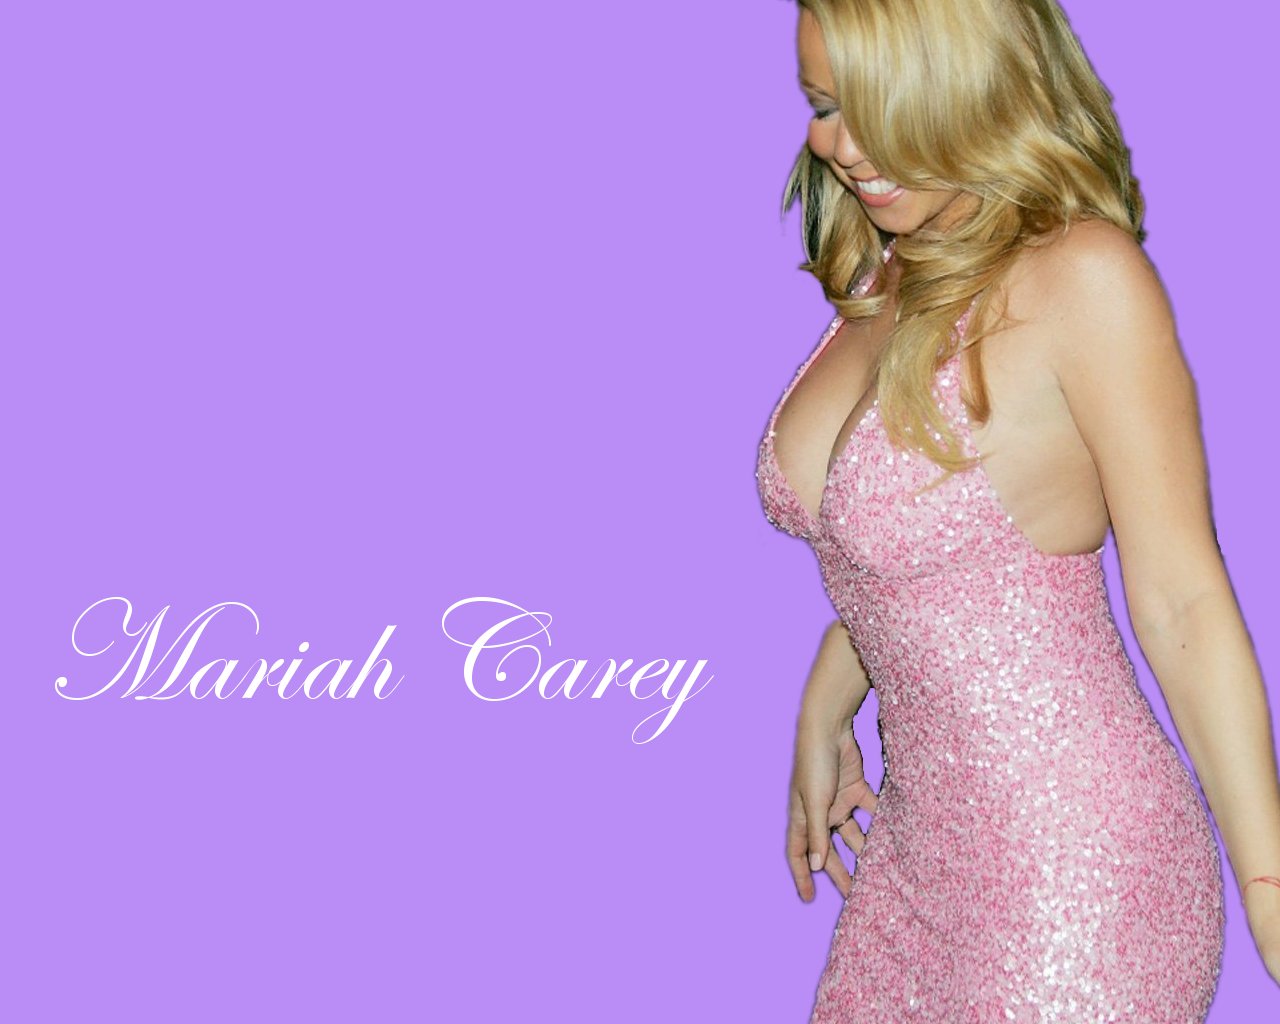 Mariah carey 35